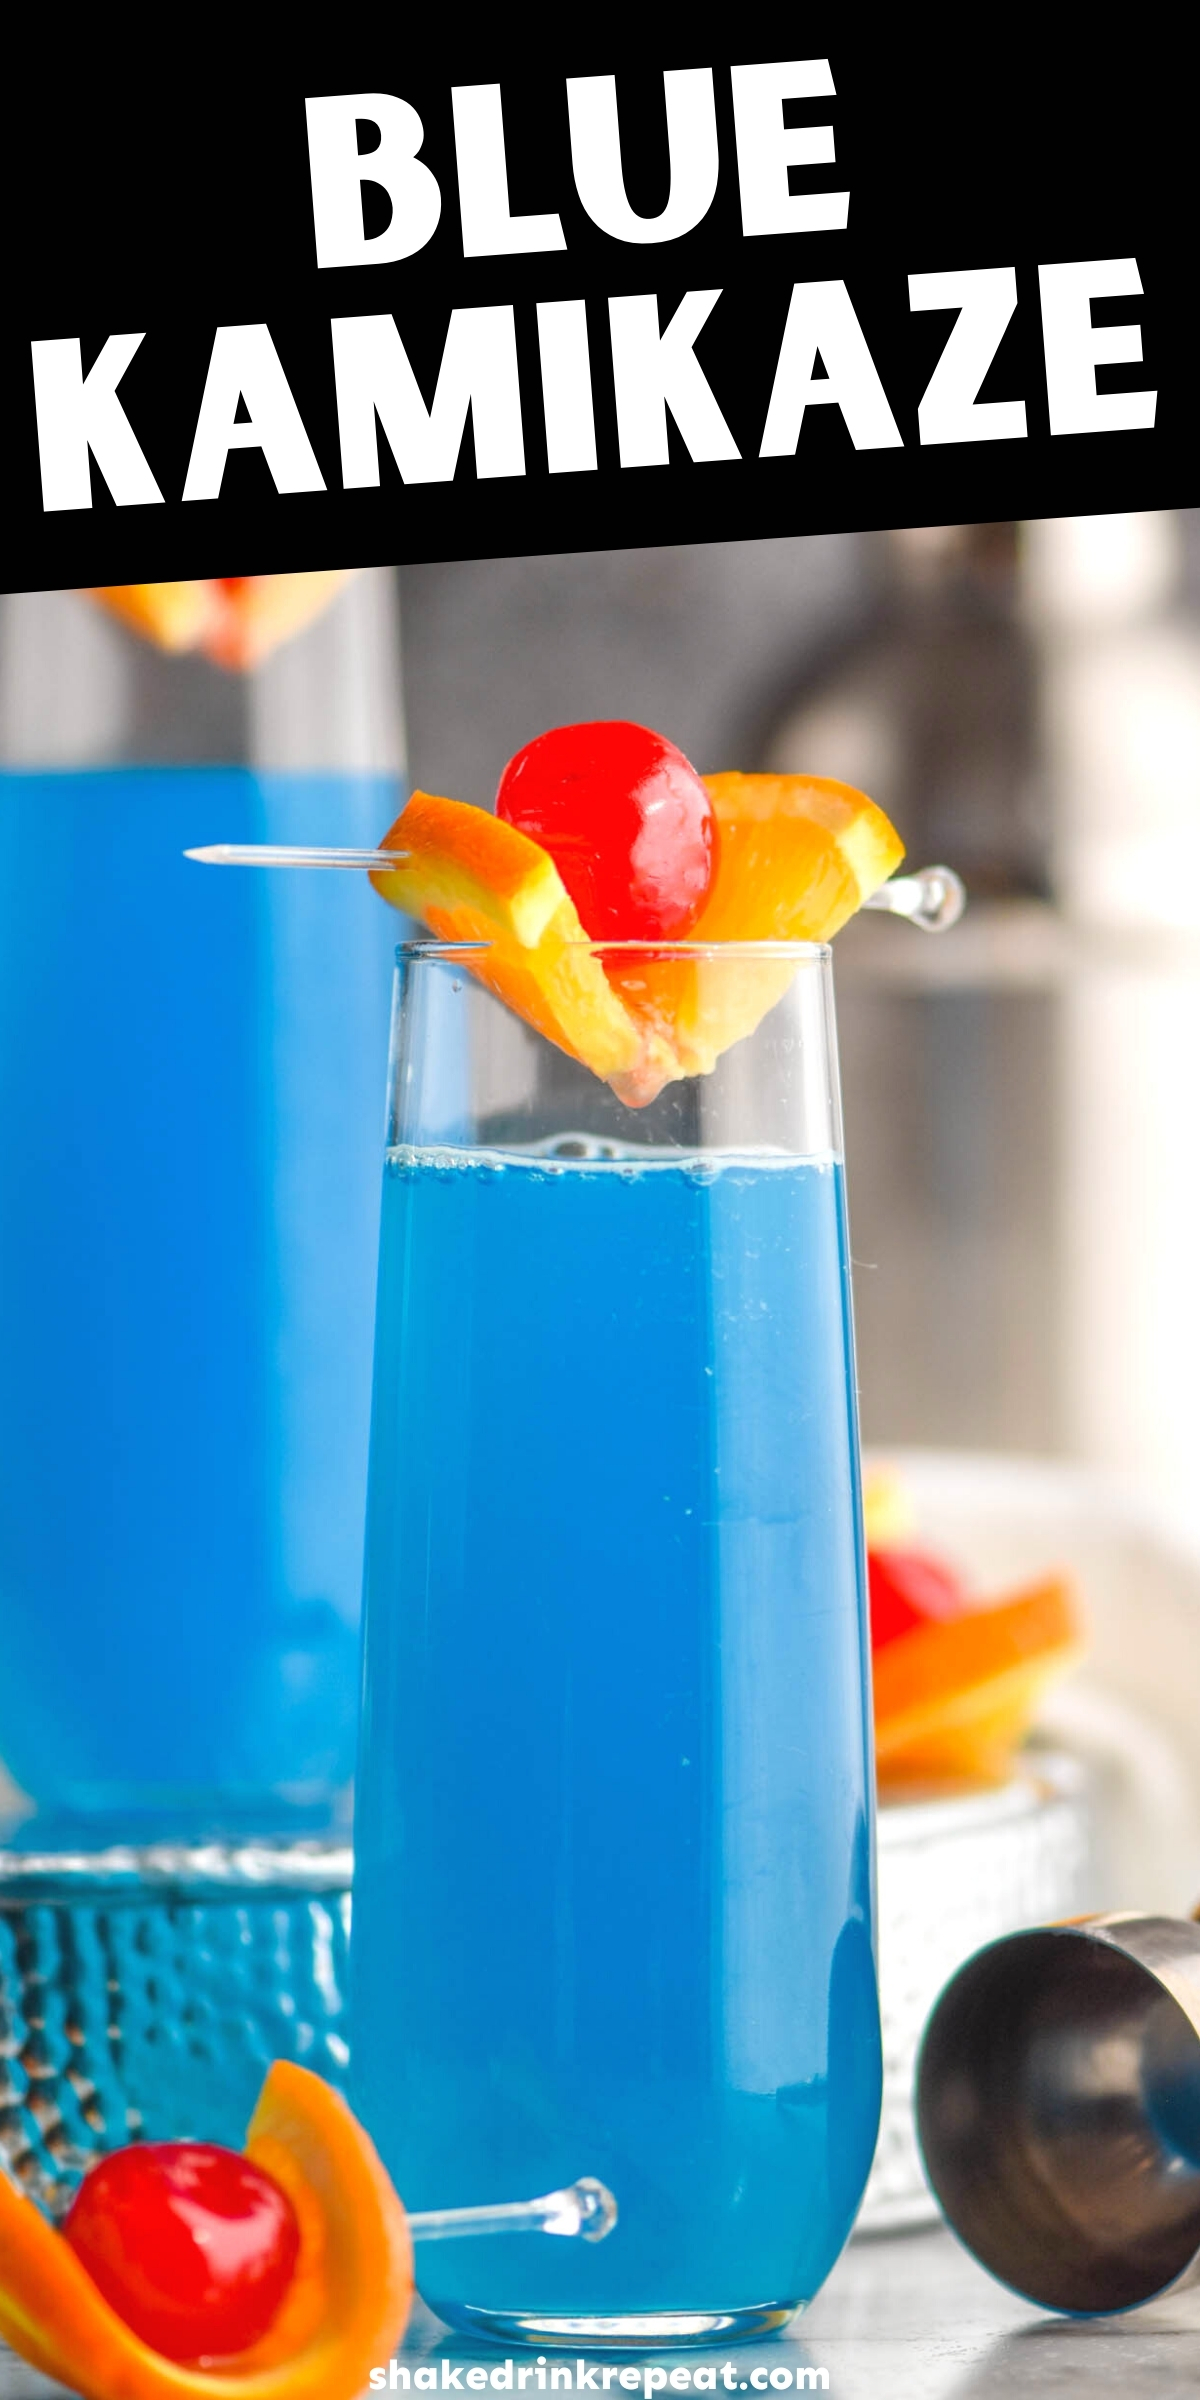 Blue Kamikaze - Shake Drink Repeat